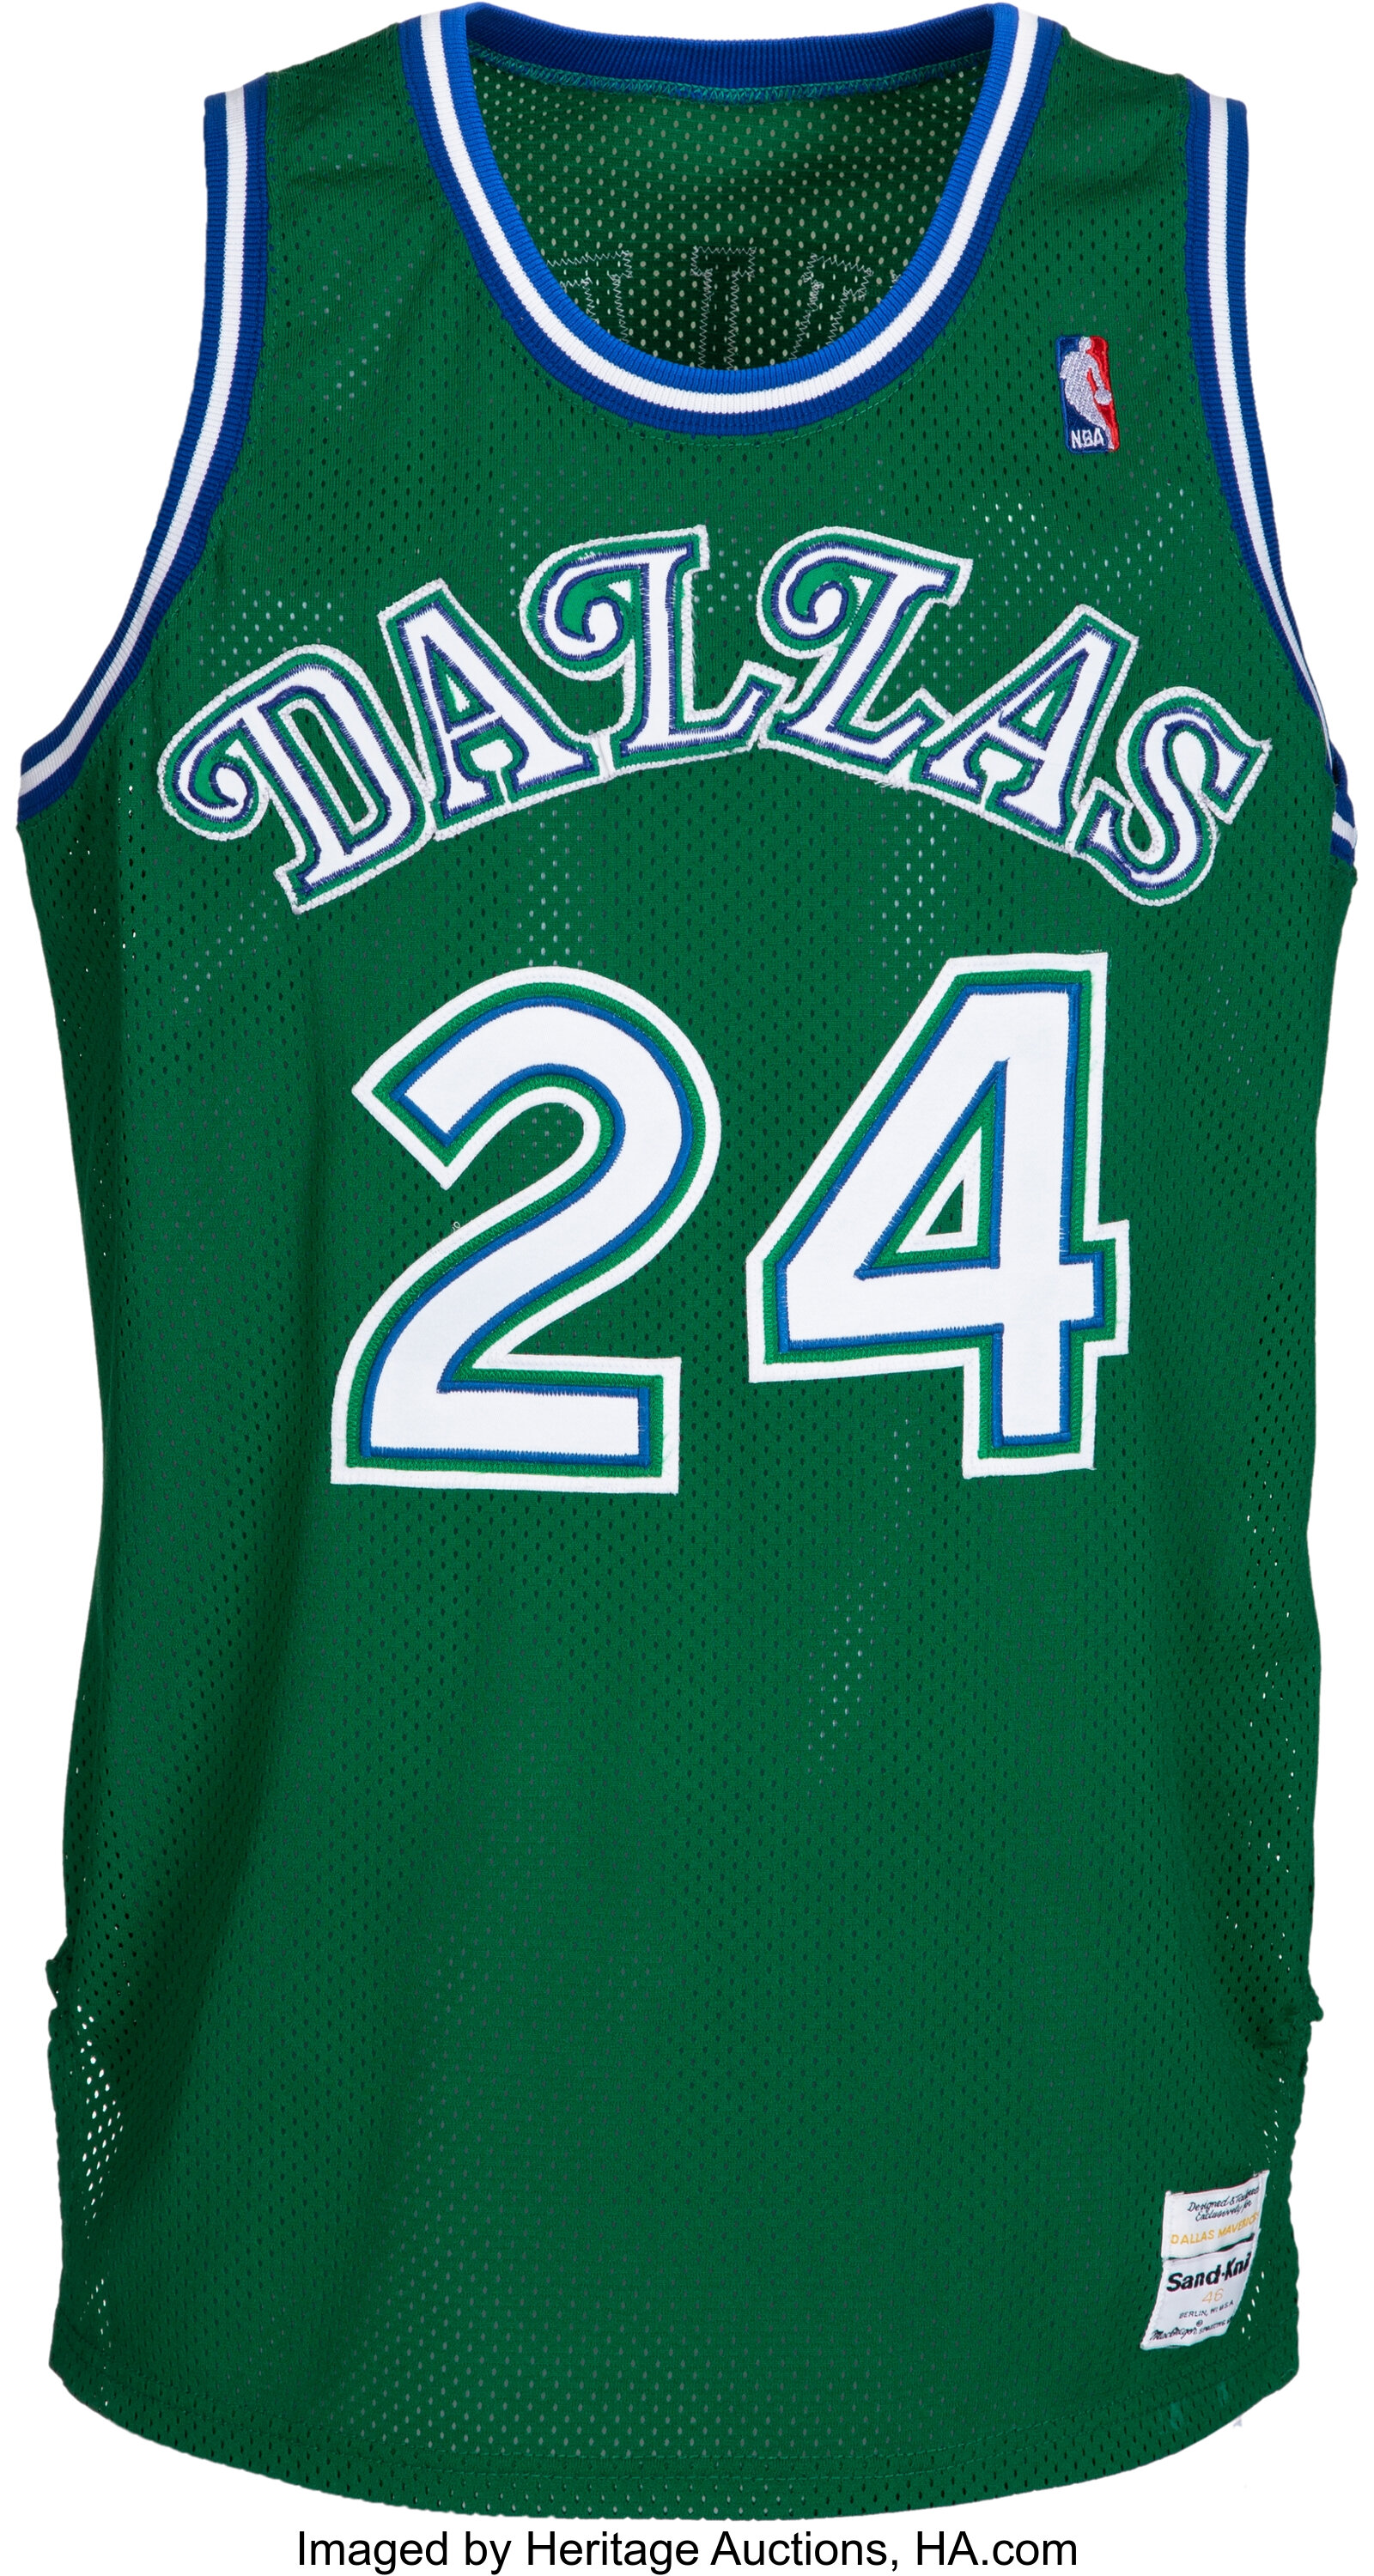 Dallas Mavericks retired jerseys - Hispanosnba.com